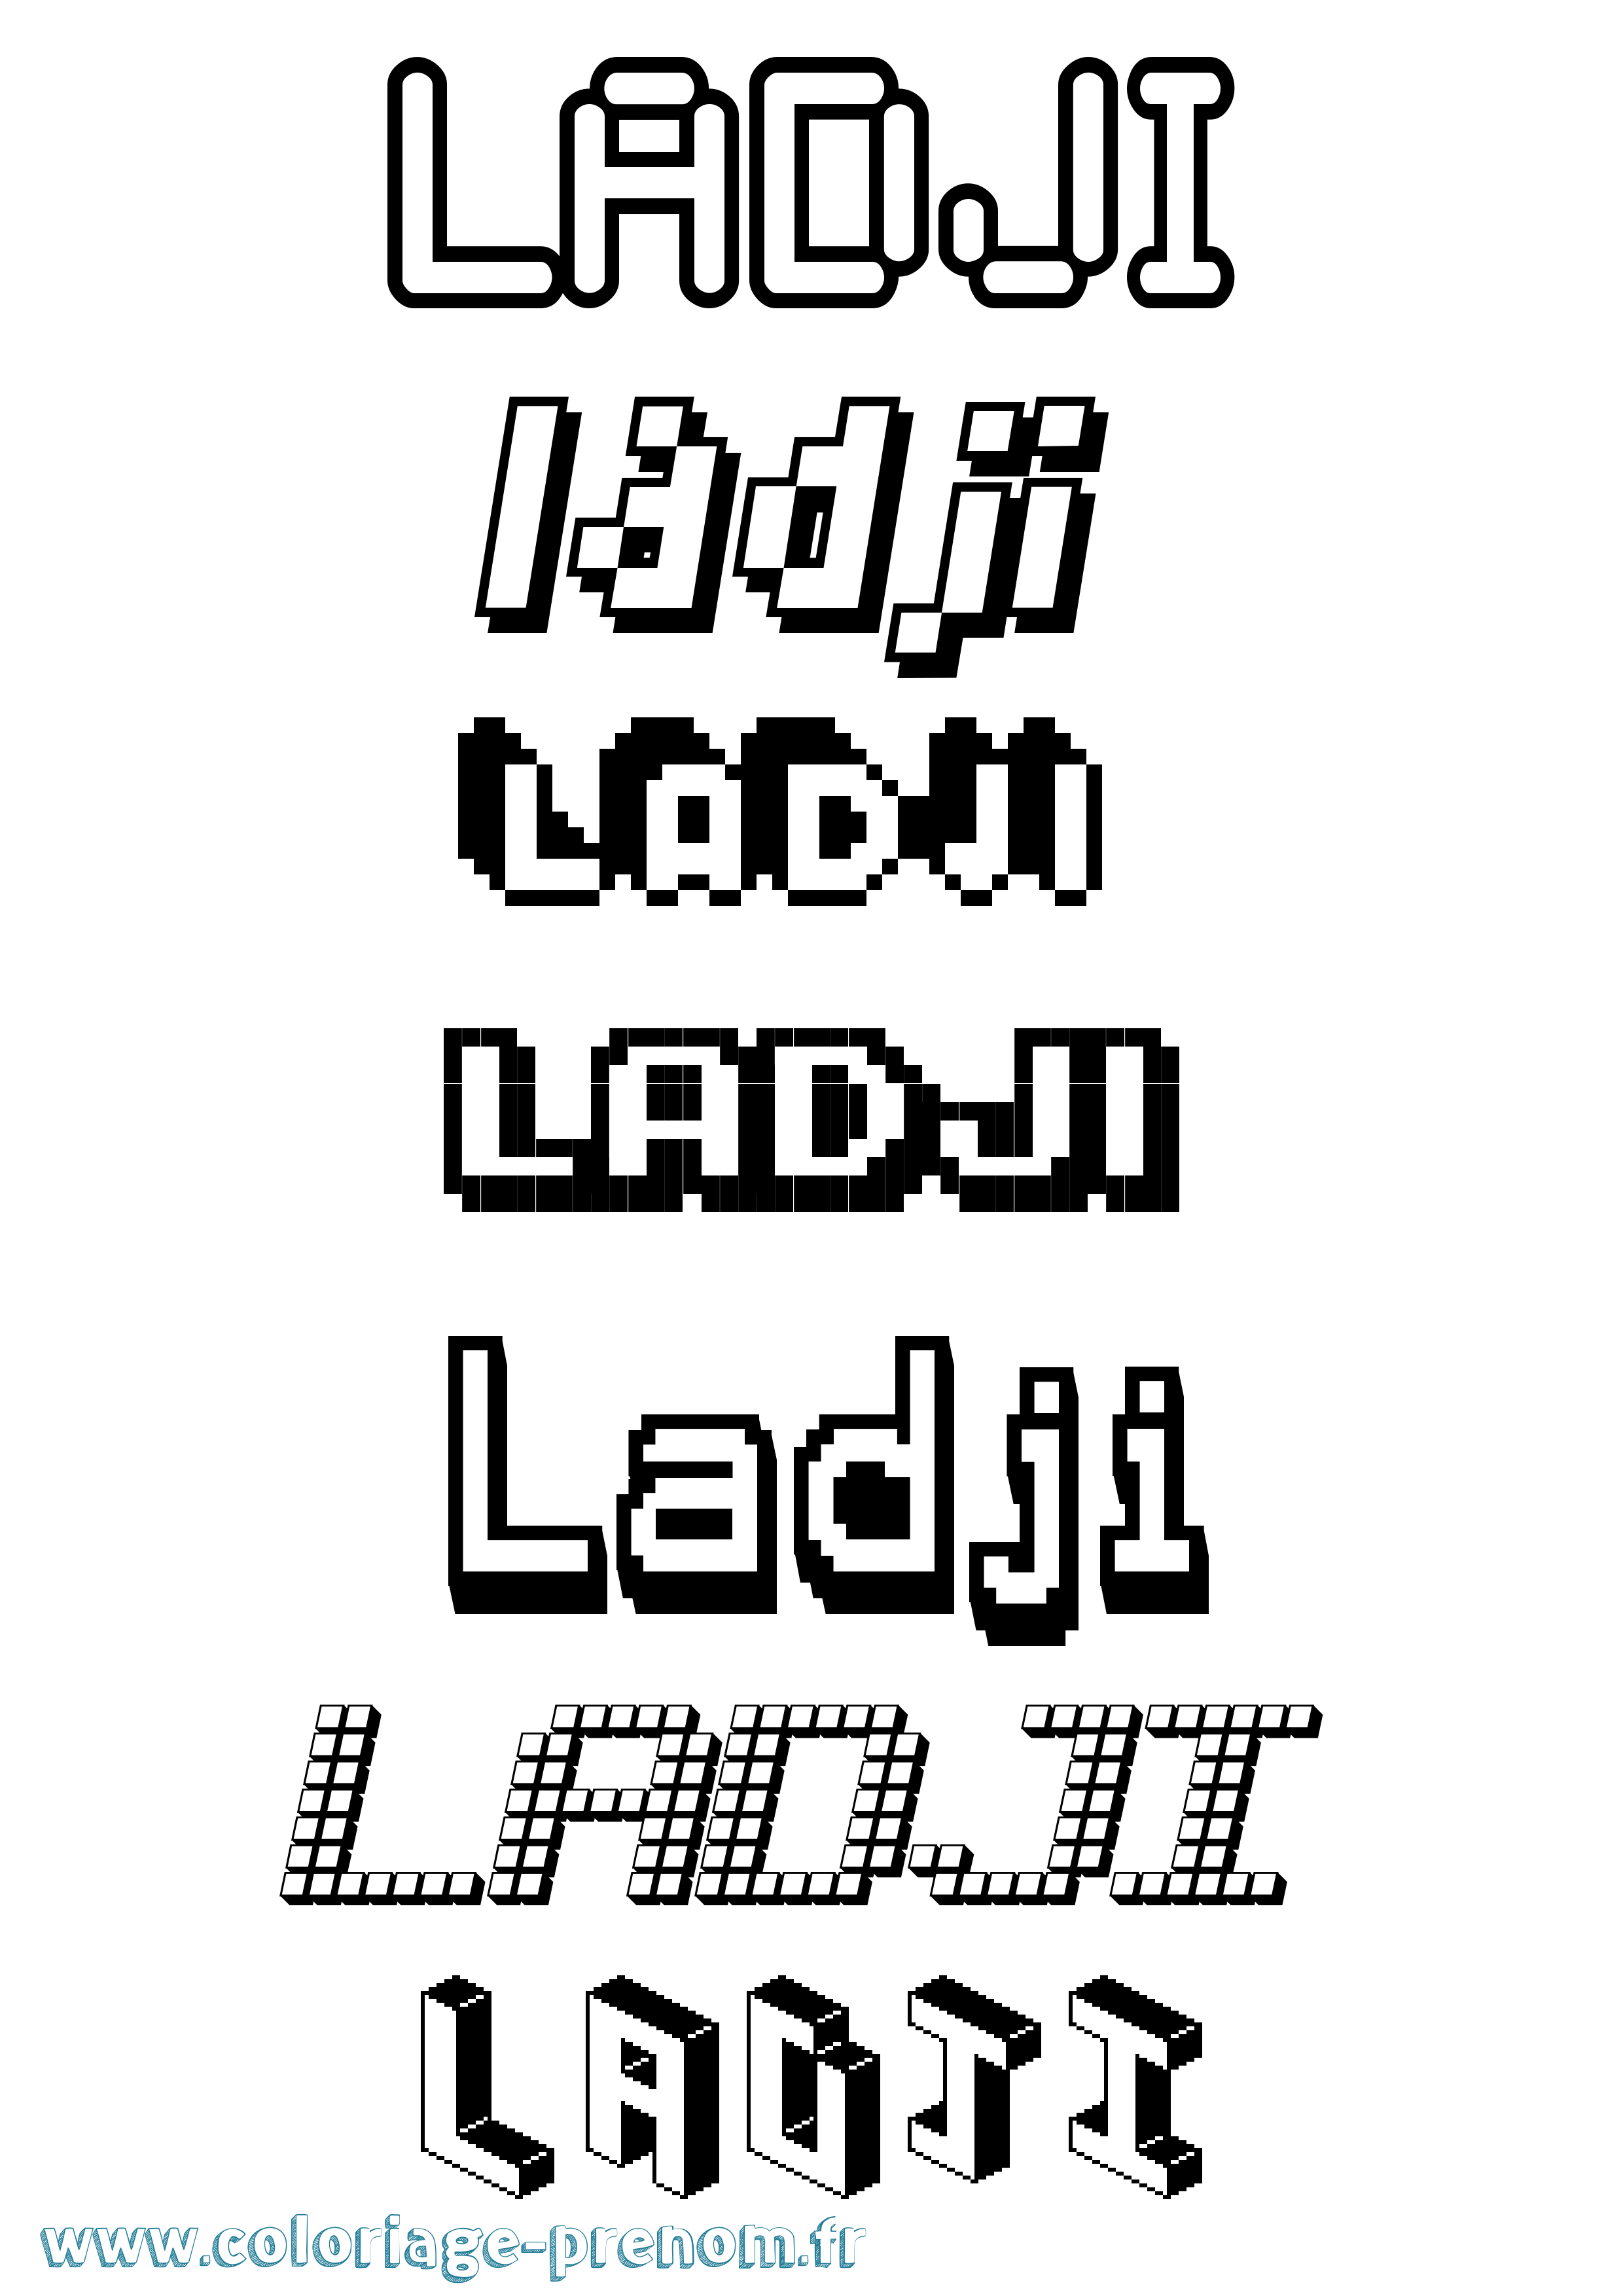 Coloriage prénom Ladji Pixel